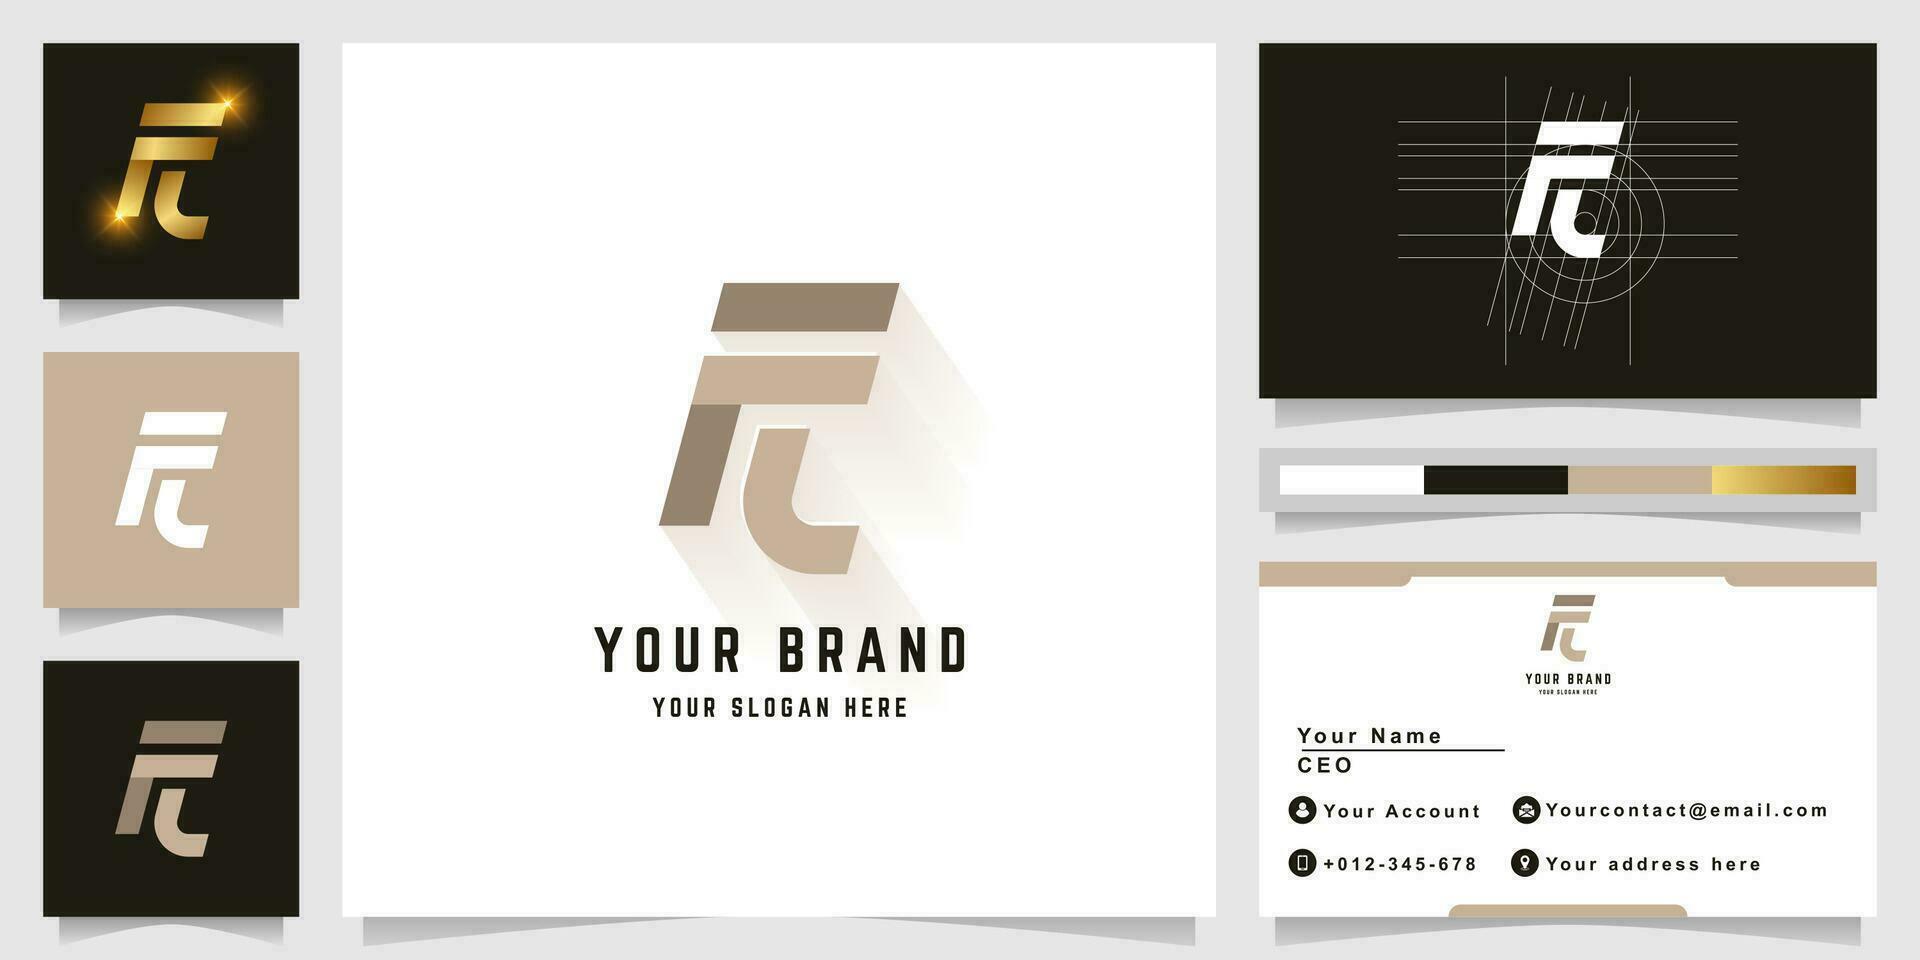 Letter FL or Fc monogram logo with business card design vector